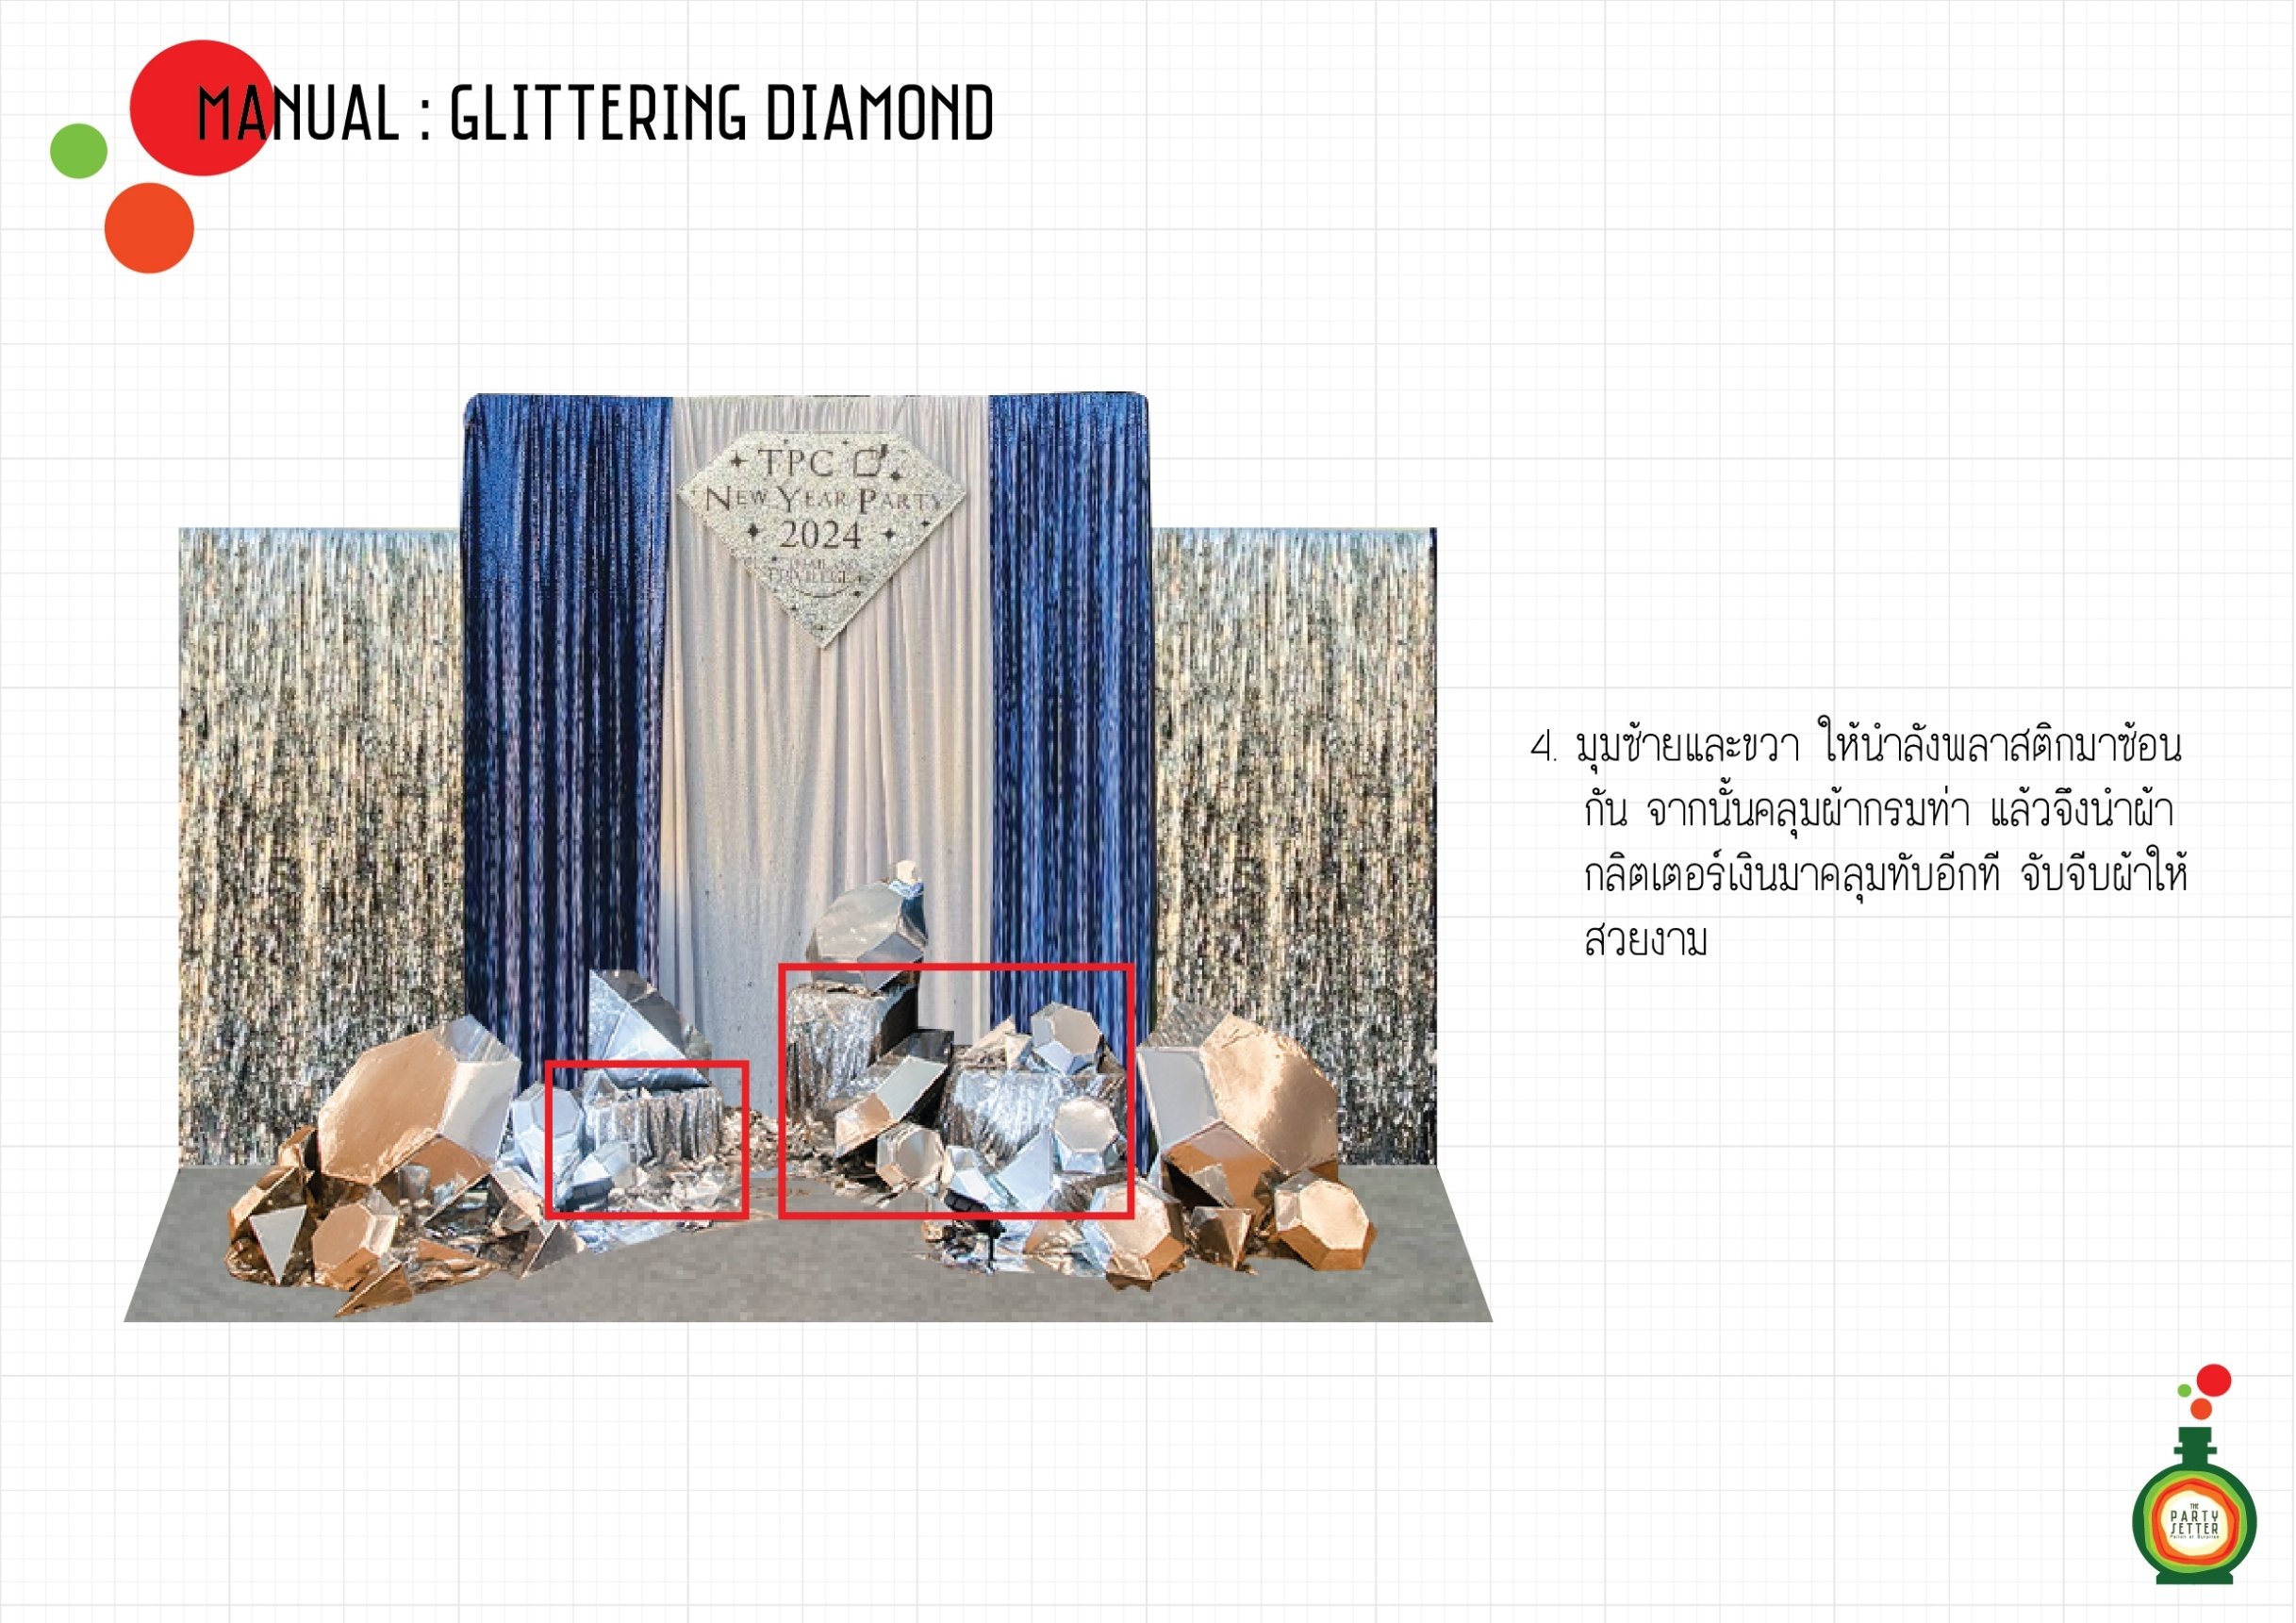 Manual_Glittering Diamond-04-01.jpg